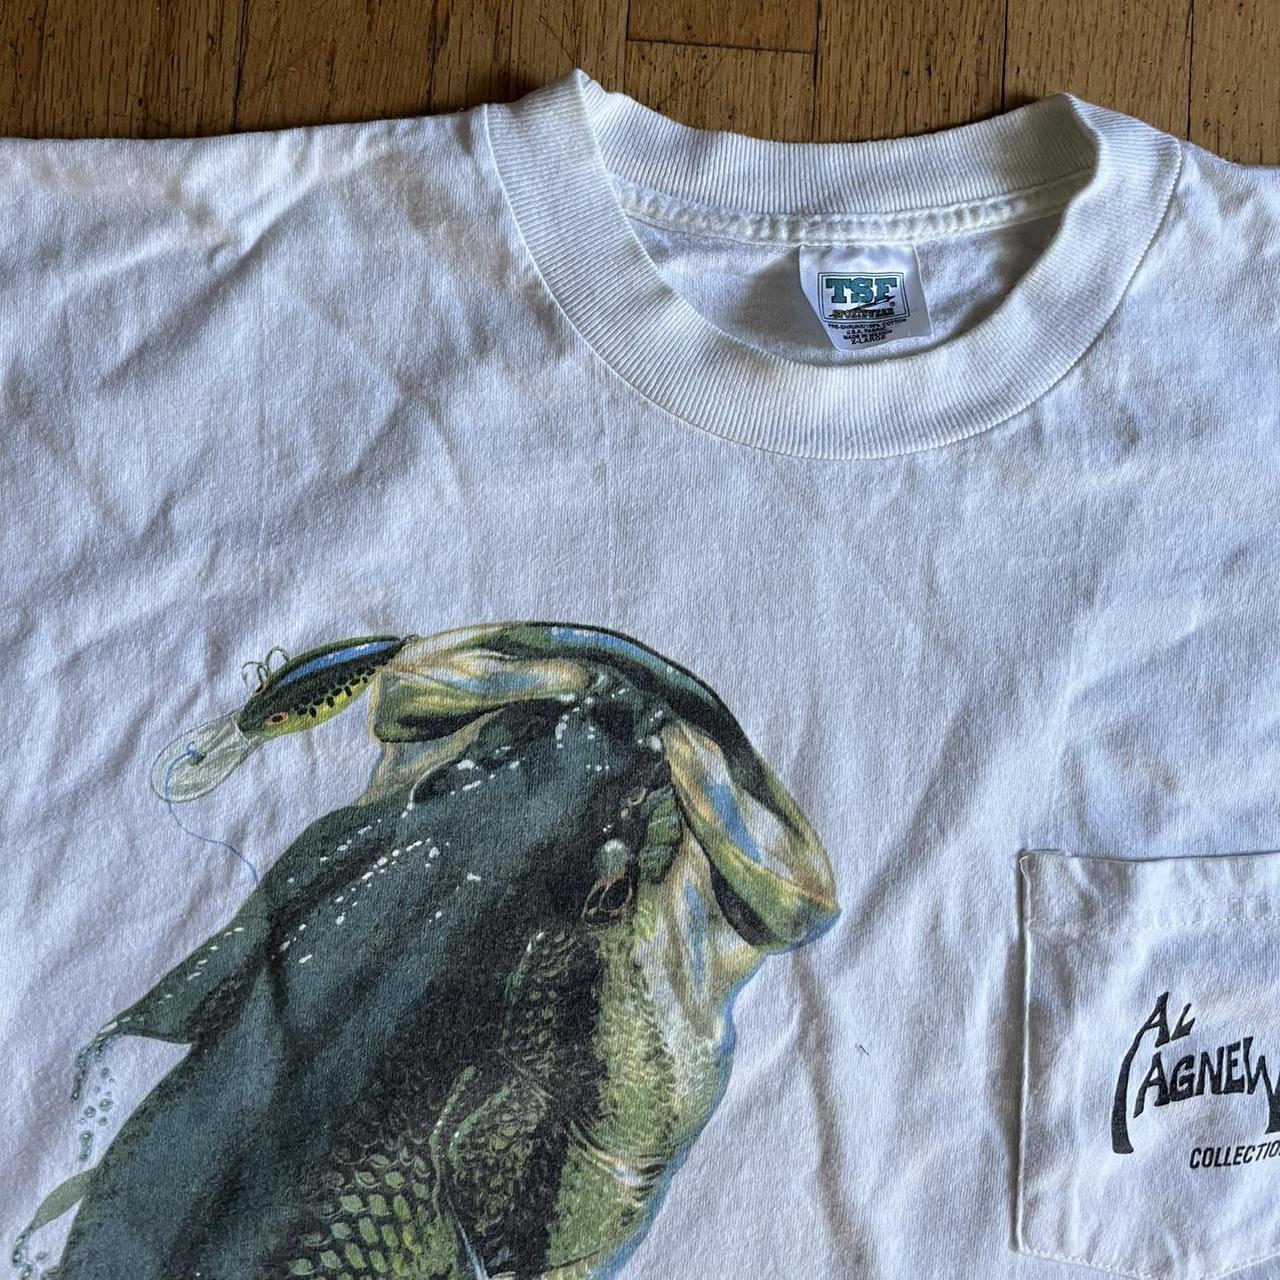 Al Agnew Fish Shirt Tagged XL Fits a little more - Depop